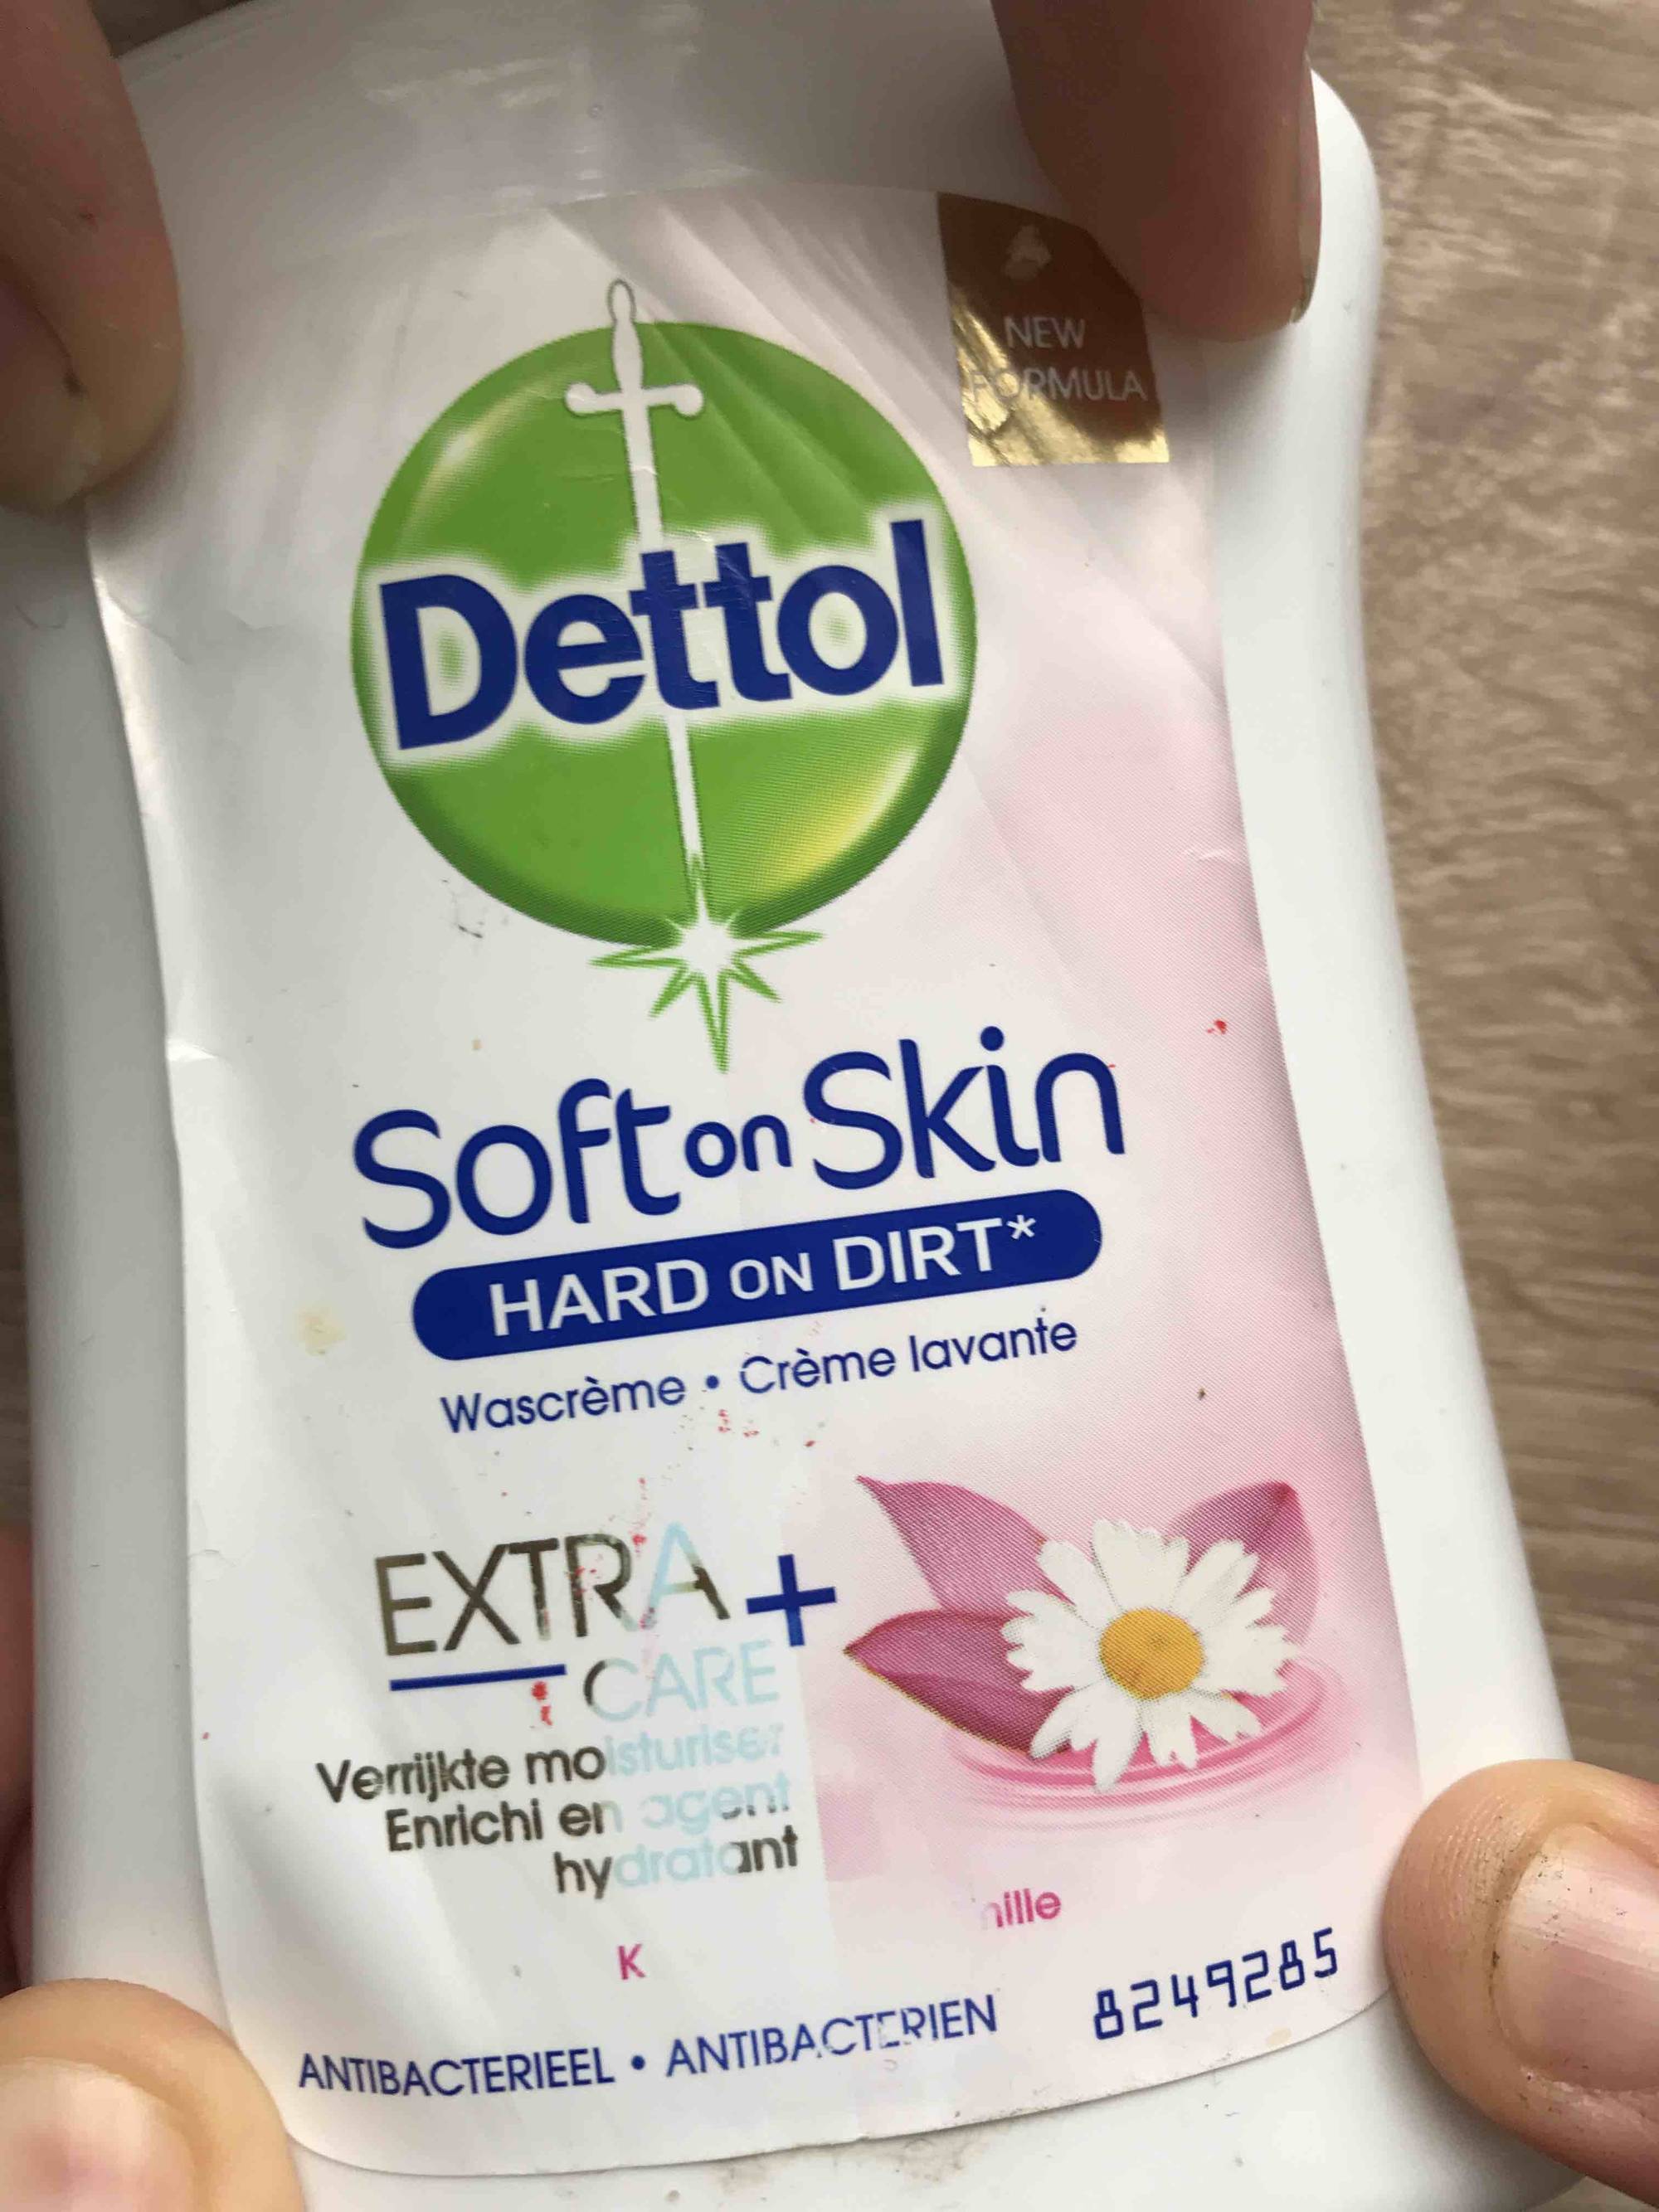 DETTOL - Soft on skin hard on dirt - Crème lavante extra care+